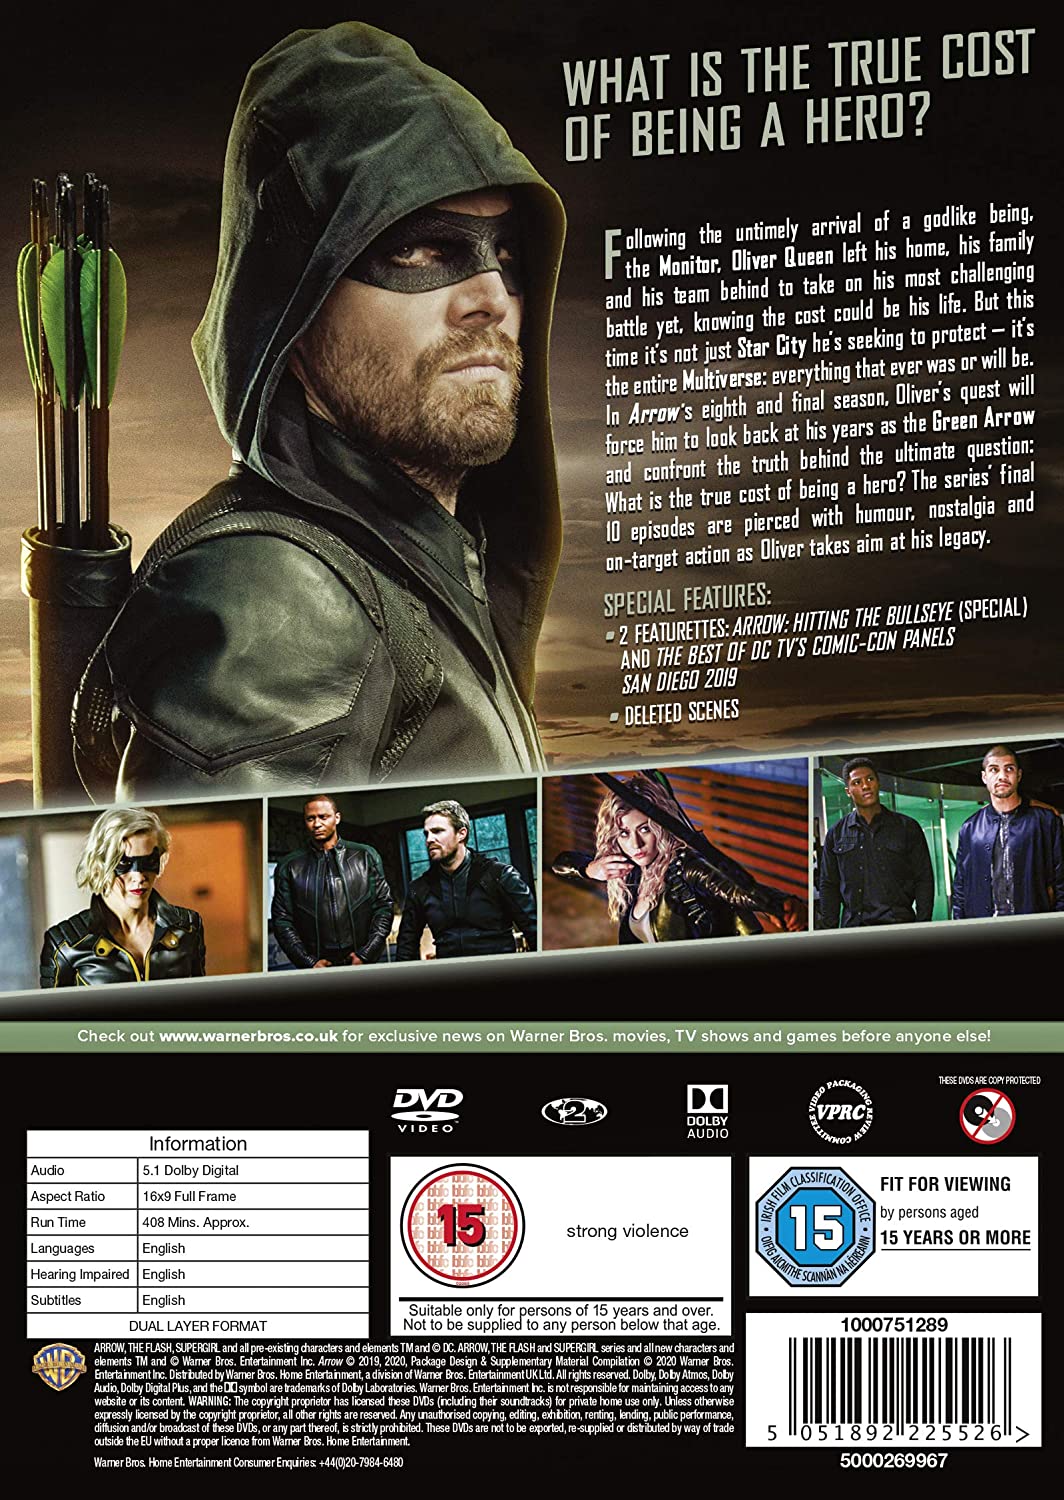 Arrow: Season 8 [2019] [2020] - Drama [DVD]